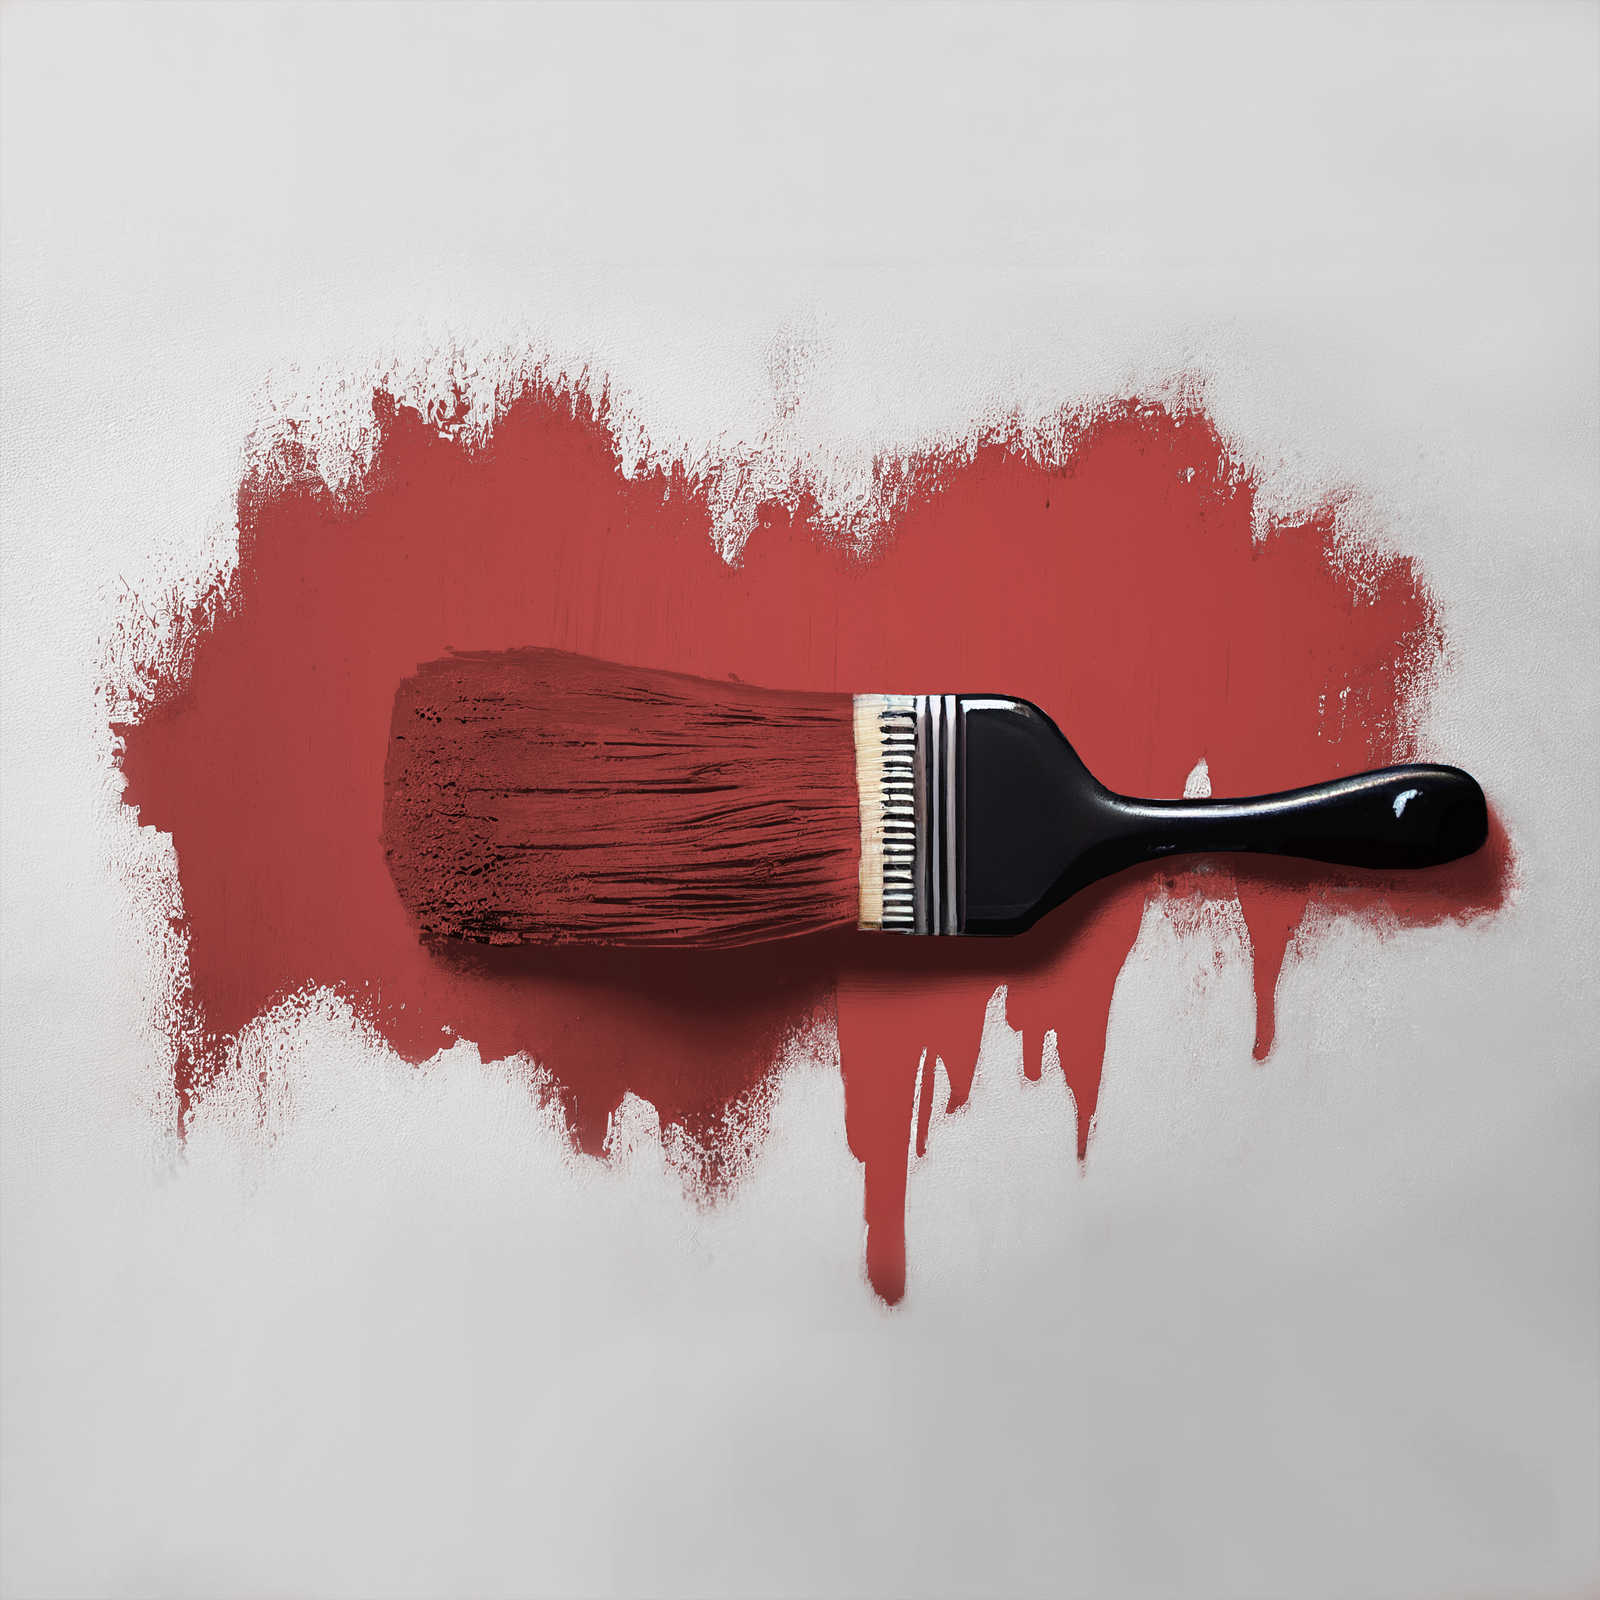             Peinture murale TCK7005 »Cheeky Chilli« en rouge feu vif – 2,5 litres
        